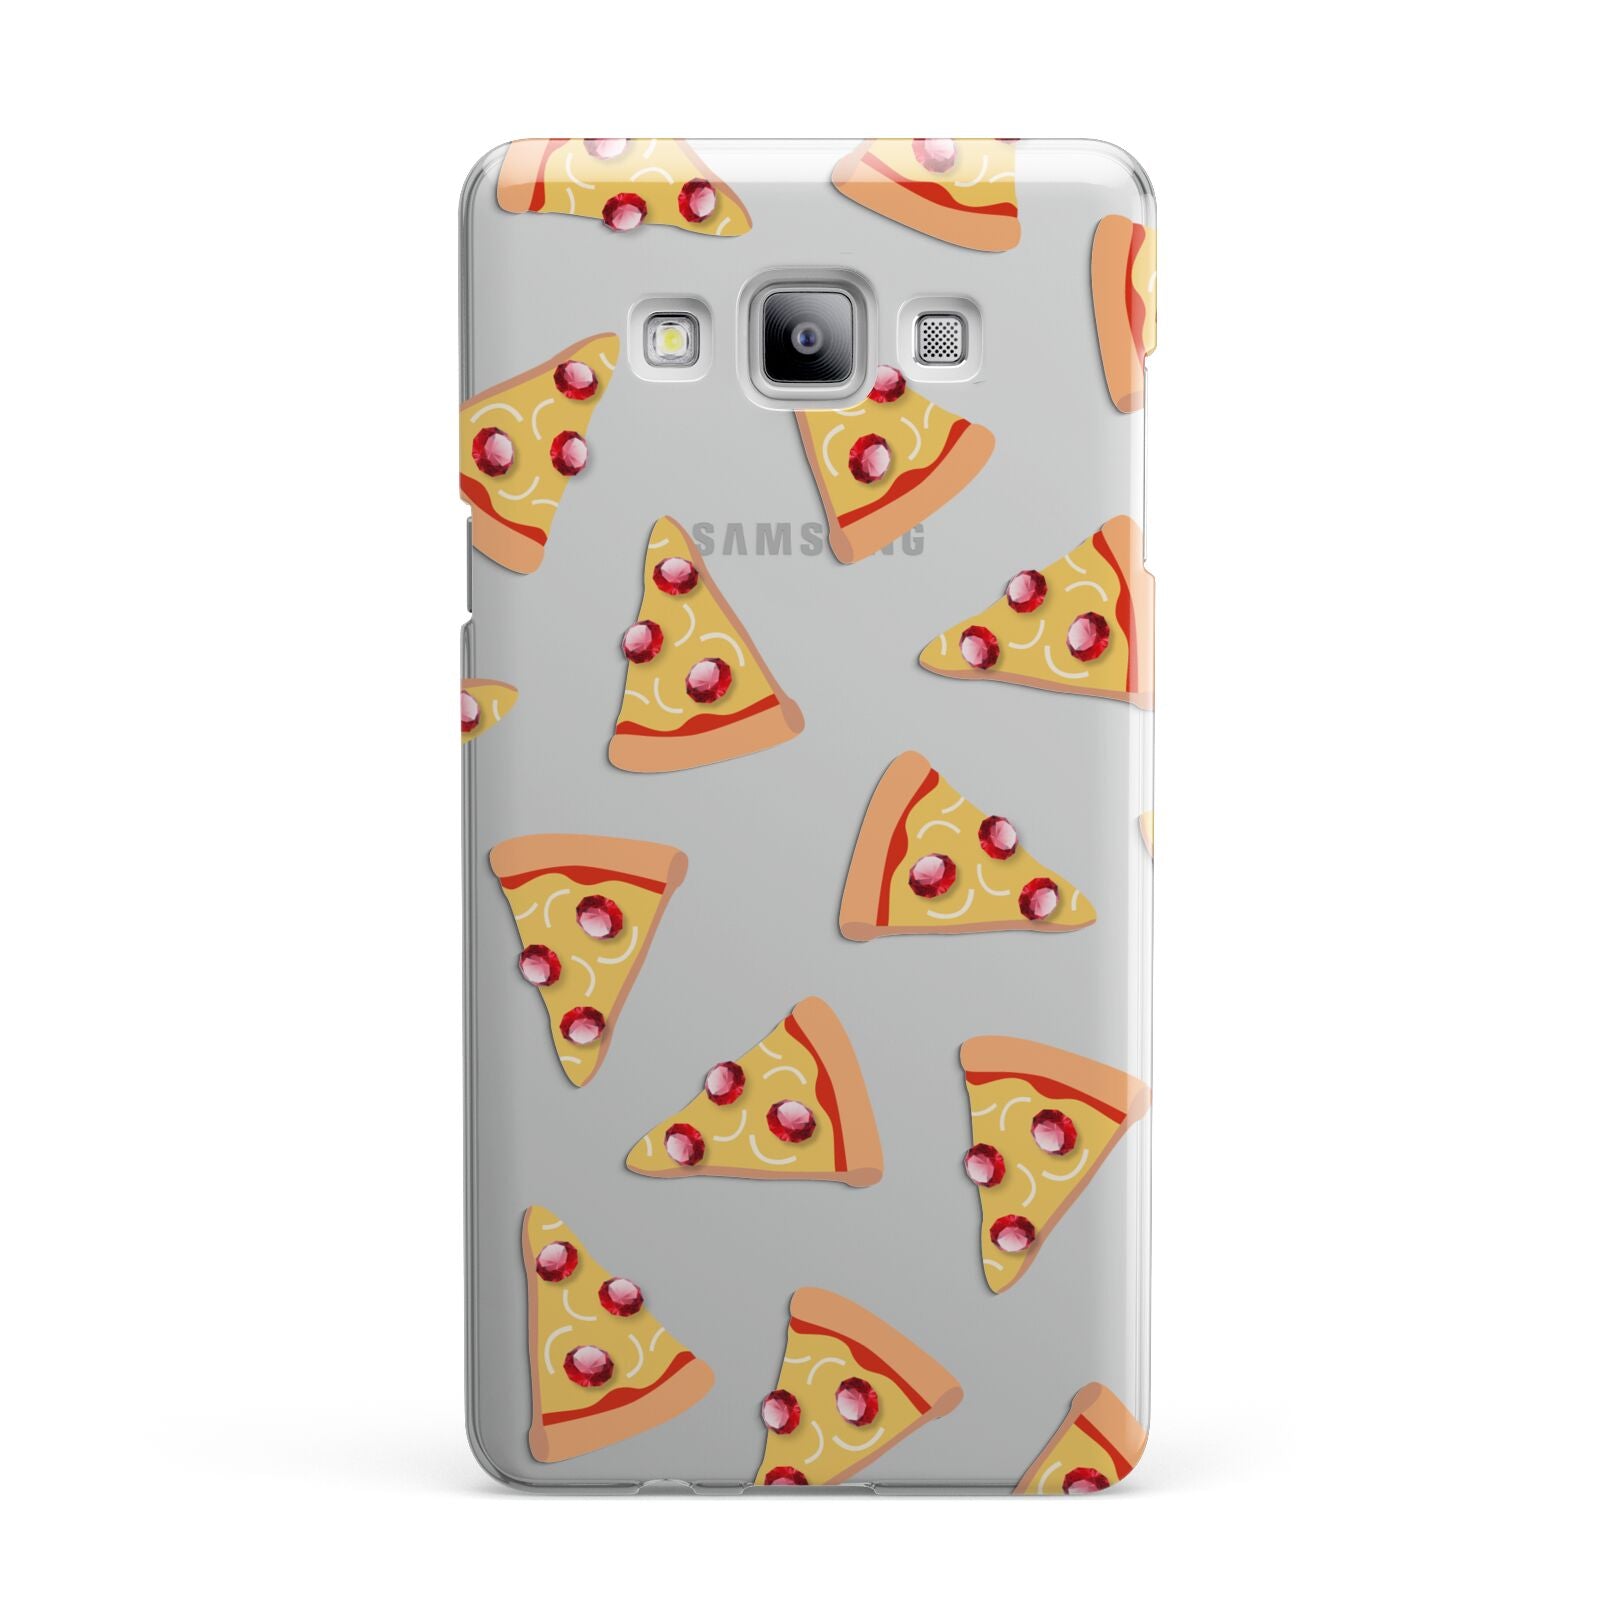 Rubies on Cartoon Pizza Slices Samsung Galaxy A7 2015 Case